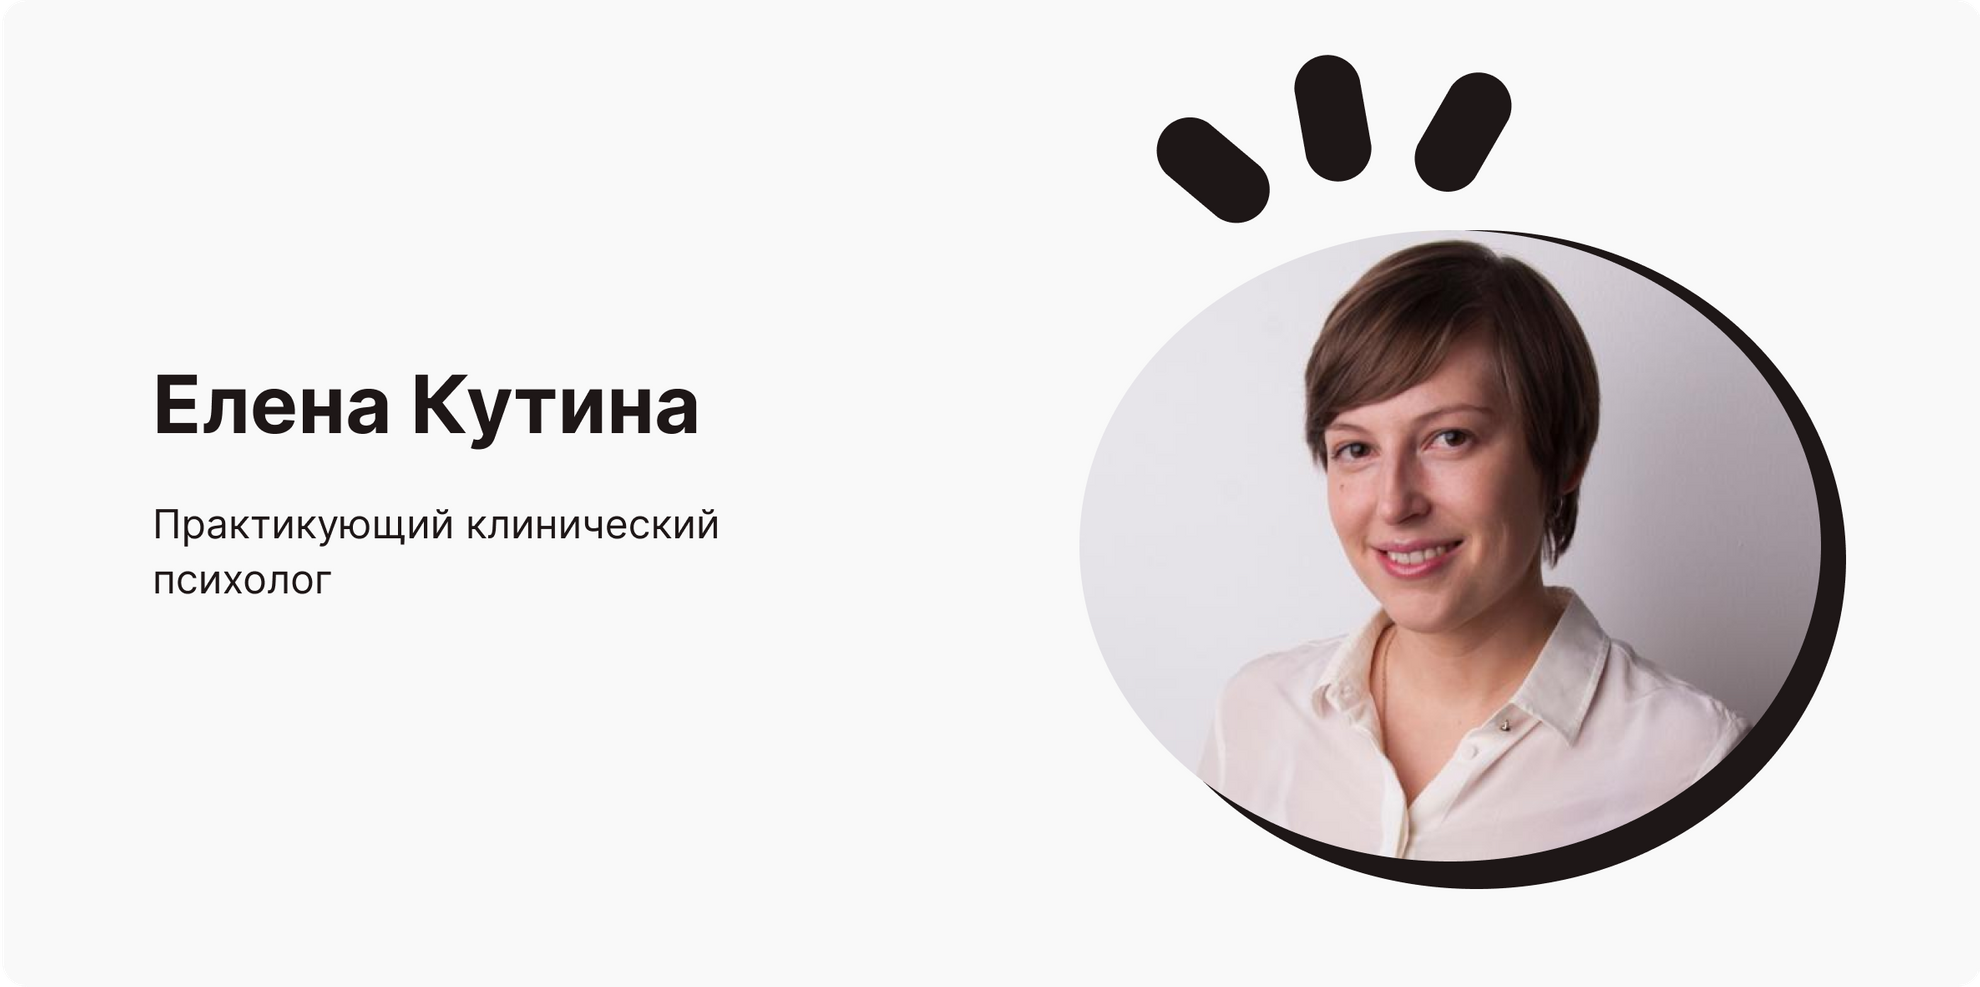 Елена Кутина, психолог